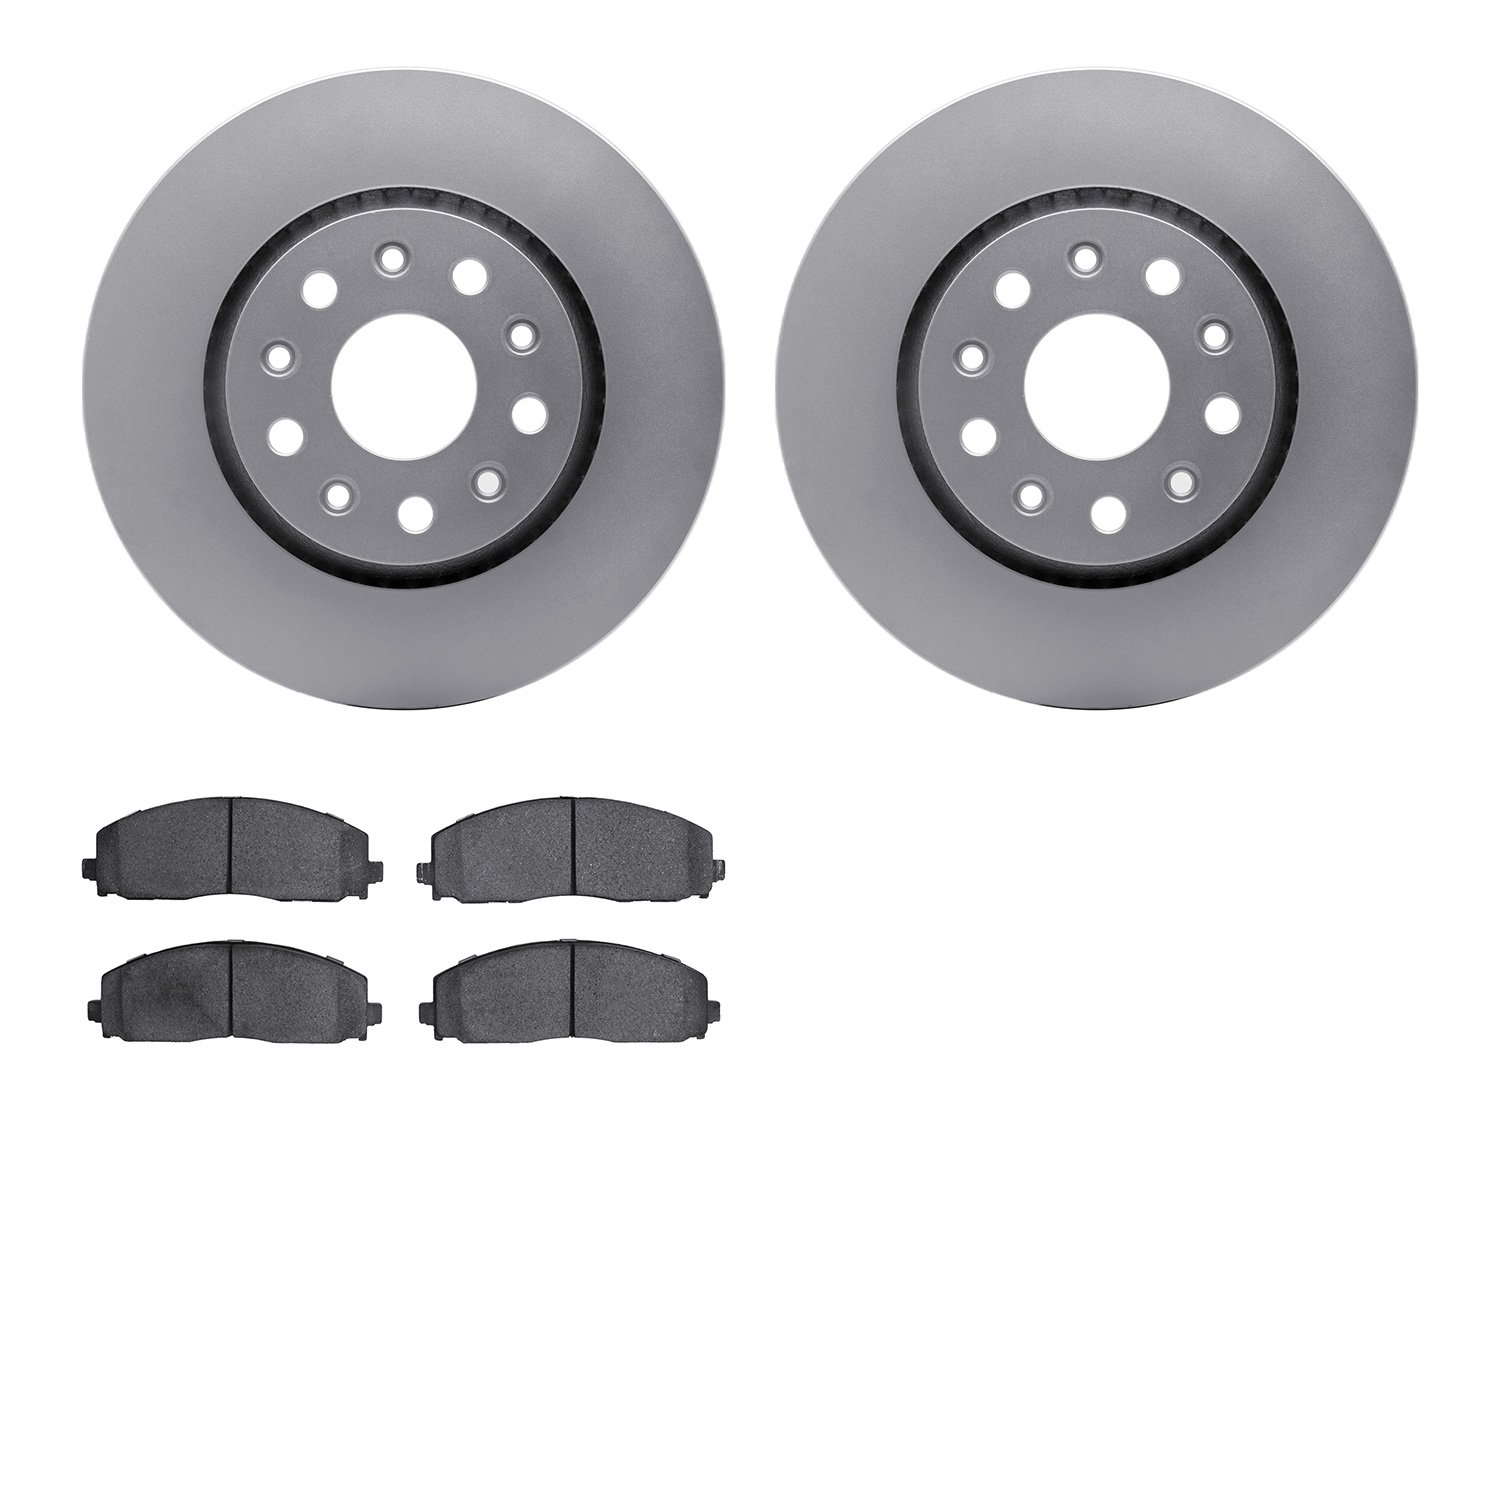 4402-42030 Geospec Brake Rotors with Ultimate-Duty Brake Pads Kit, Fits Select Mopar, Position: Front